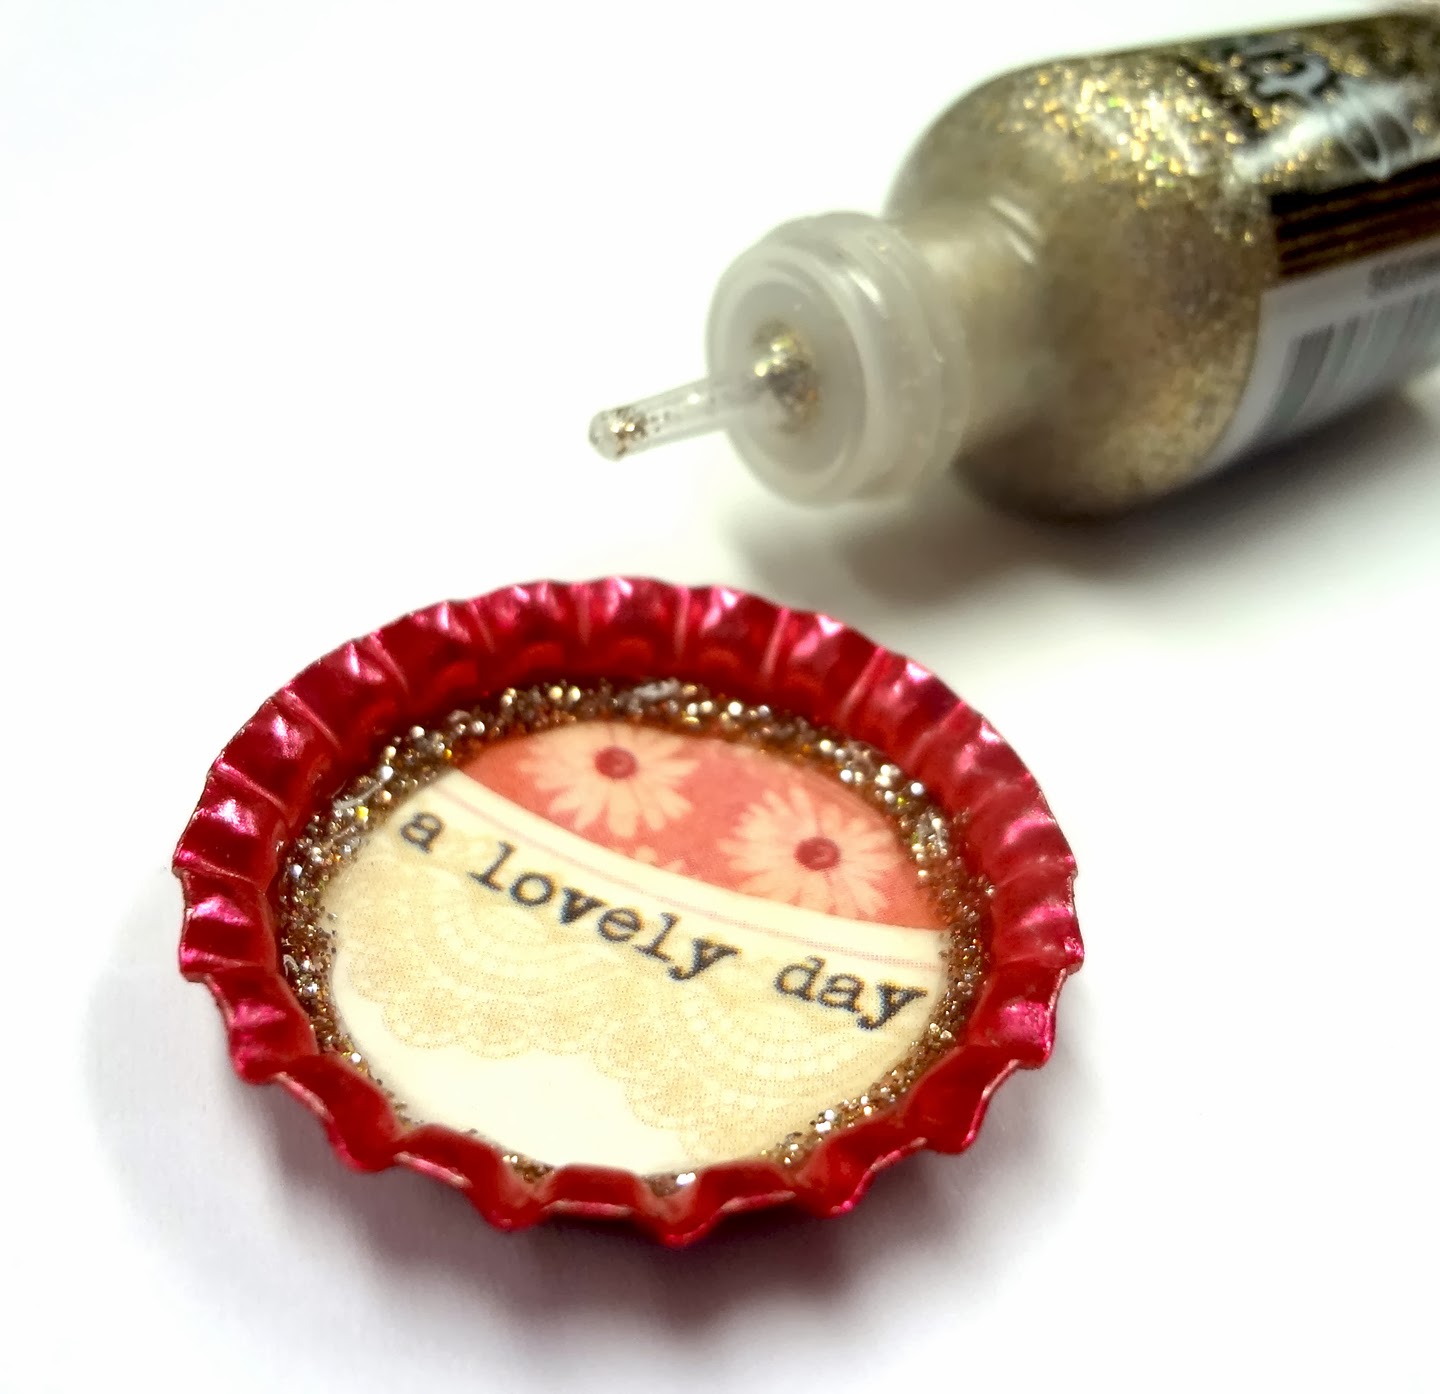 Resin Crafts: Glittered Jewelry Resin Bottle Cap Pendant - Hobby Lobby